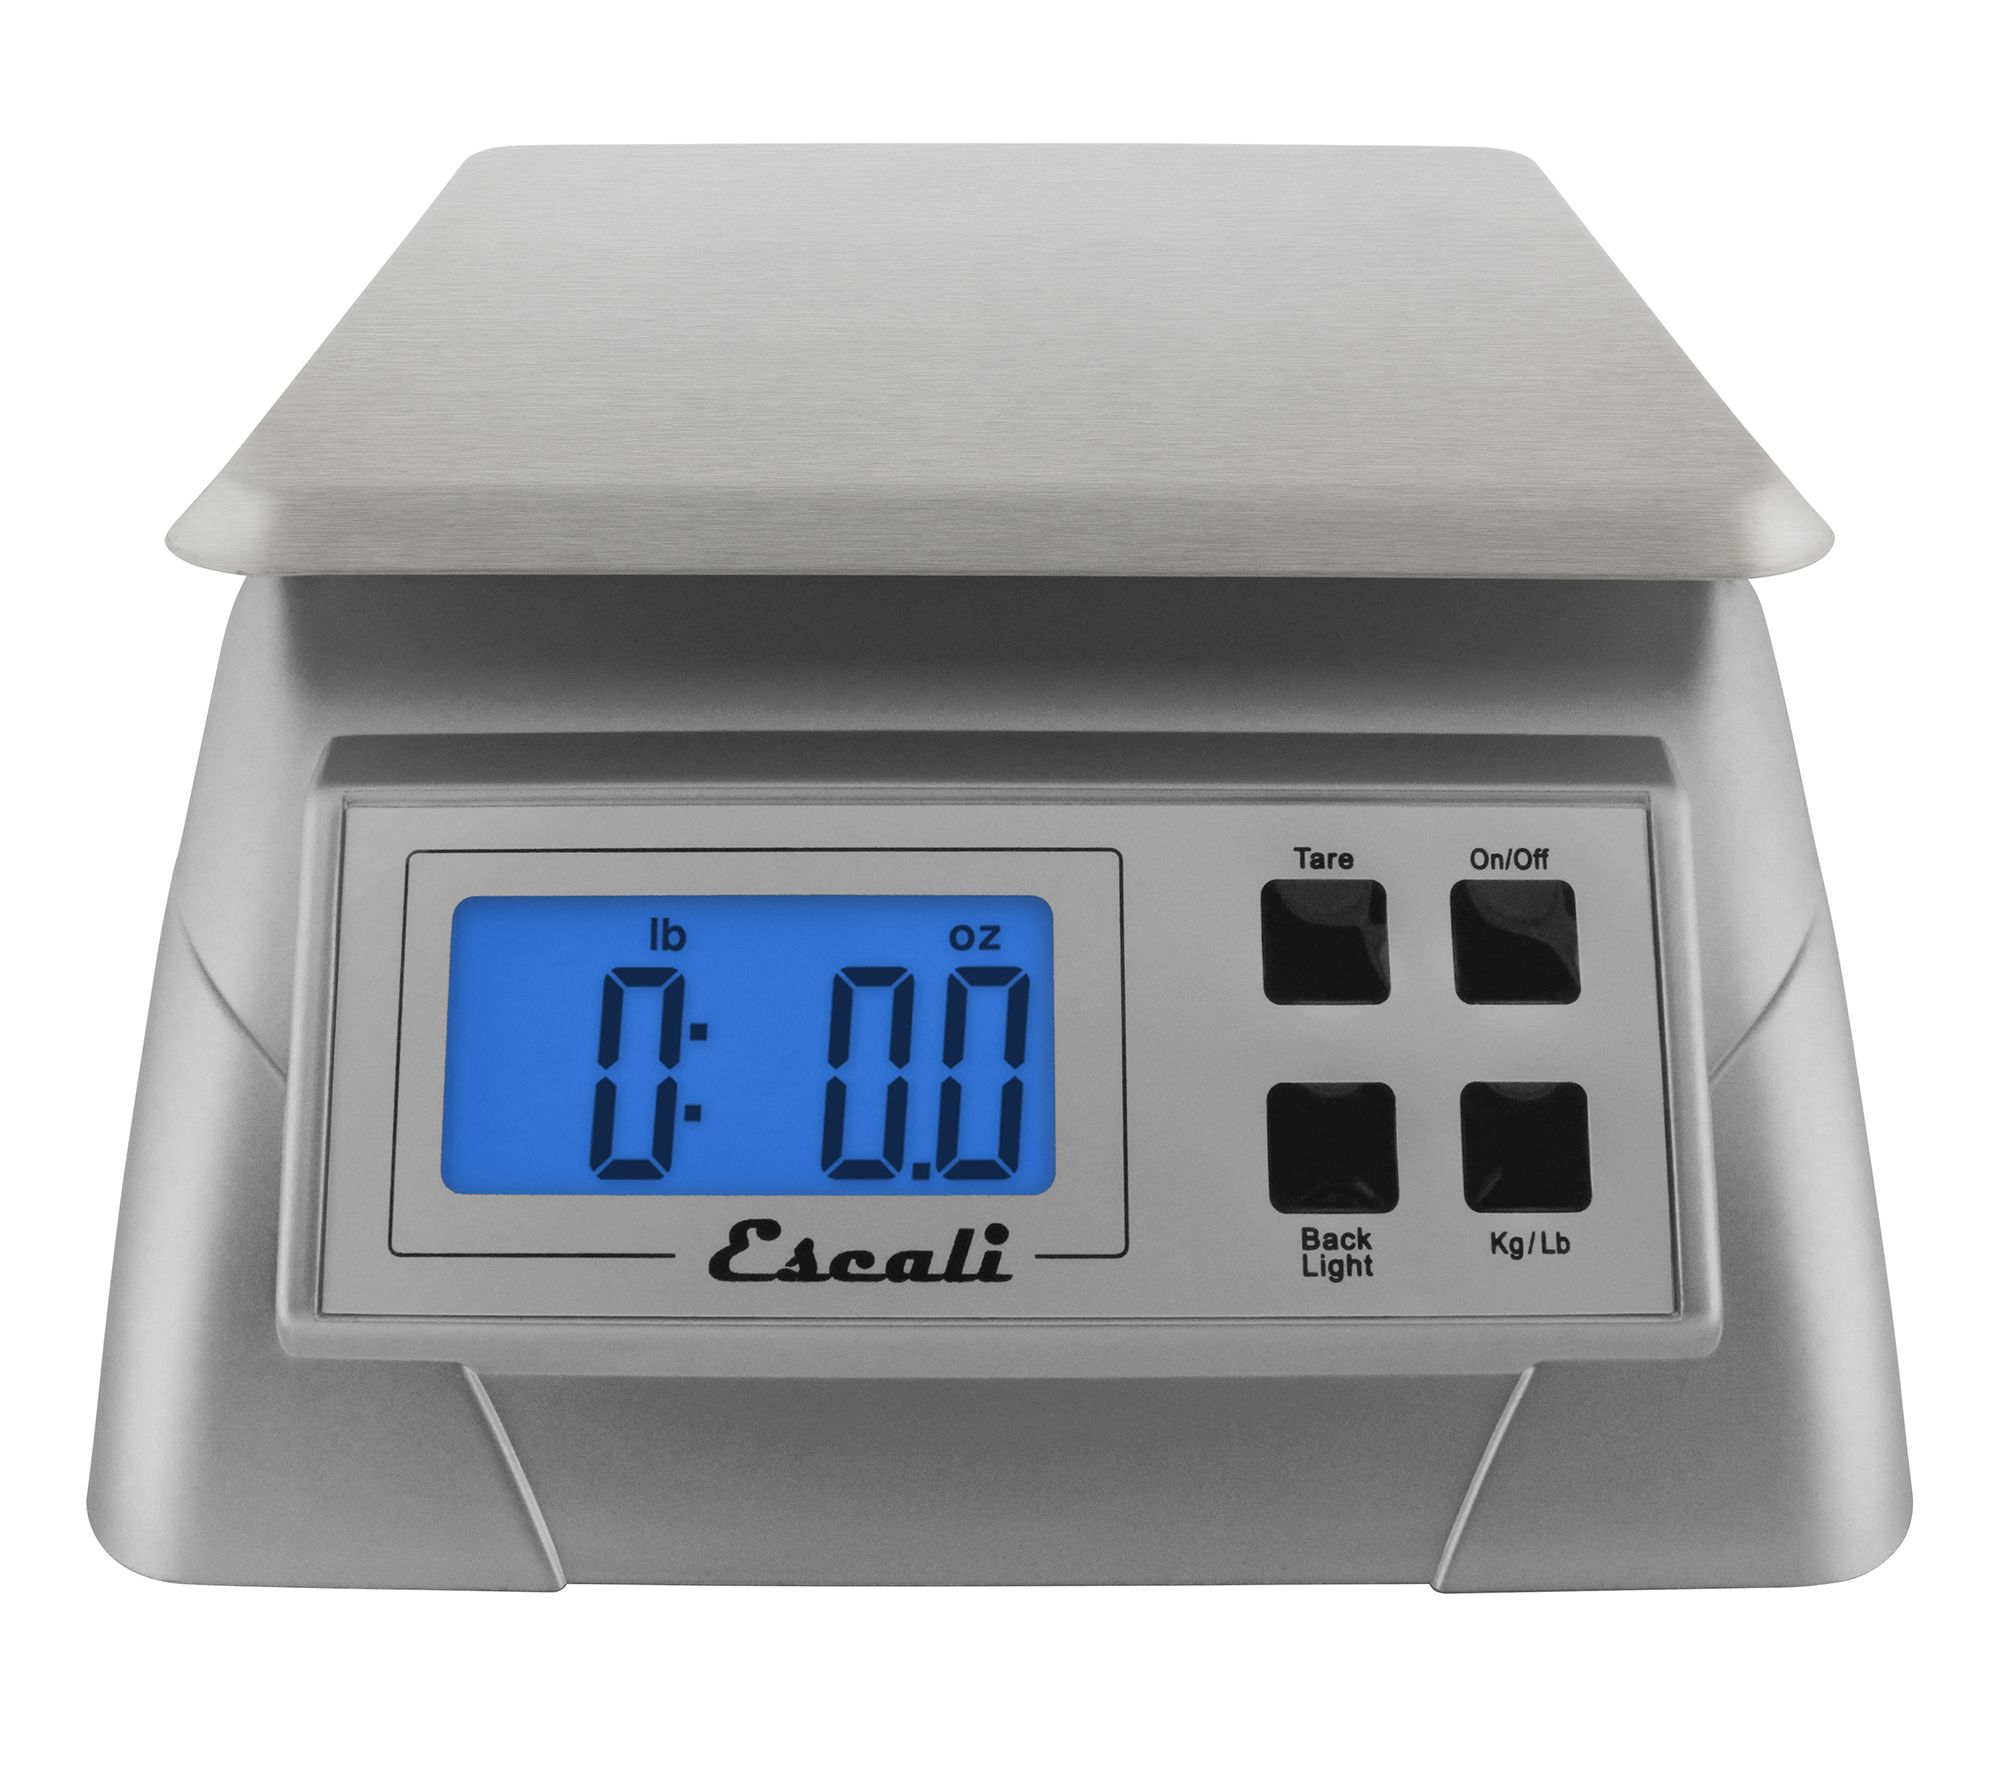 Escali Mercado Dial Scale with Bowl, 11 Pound